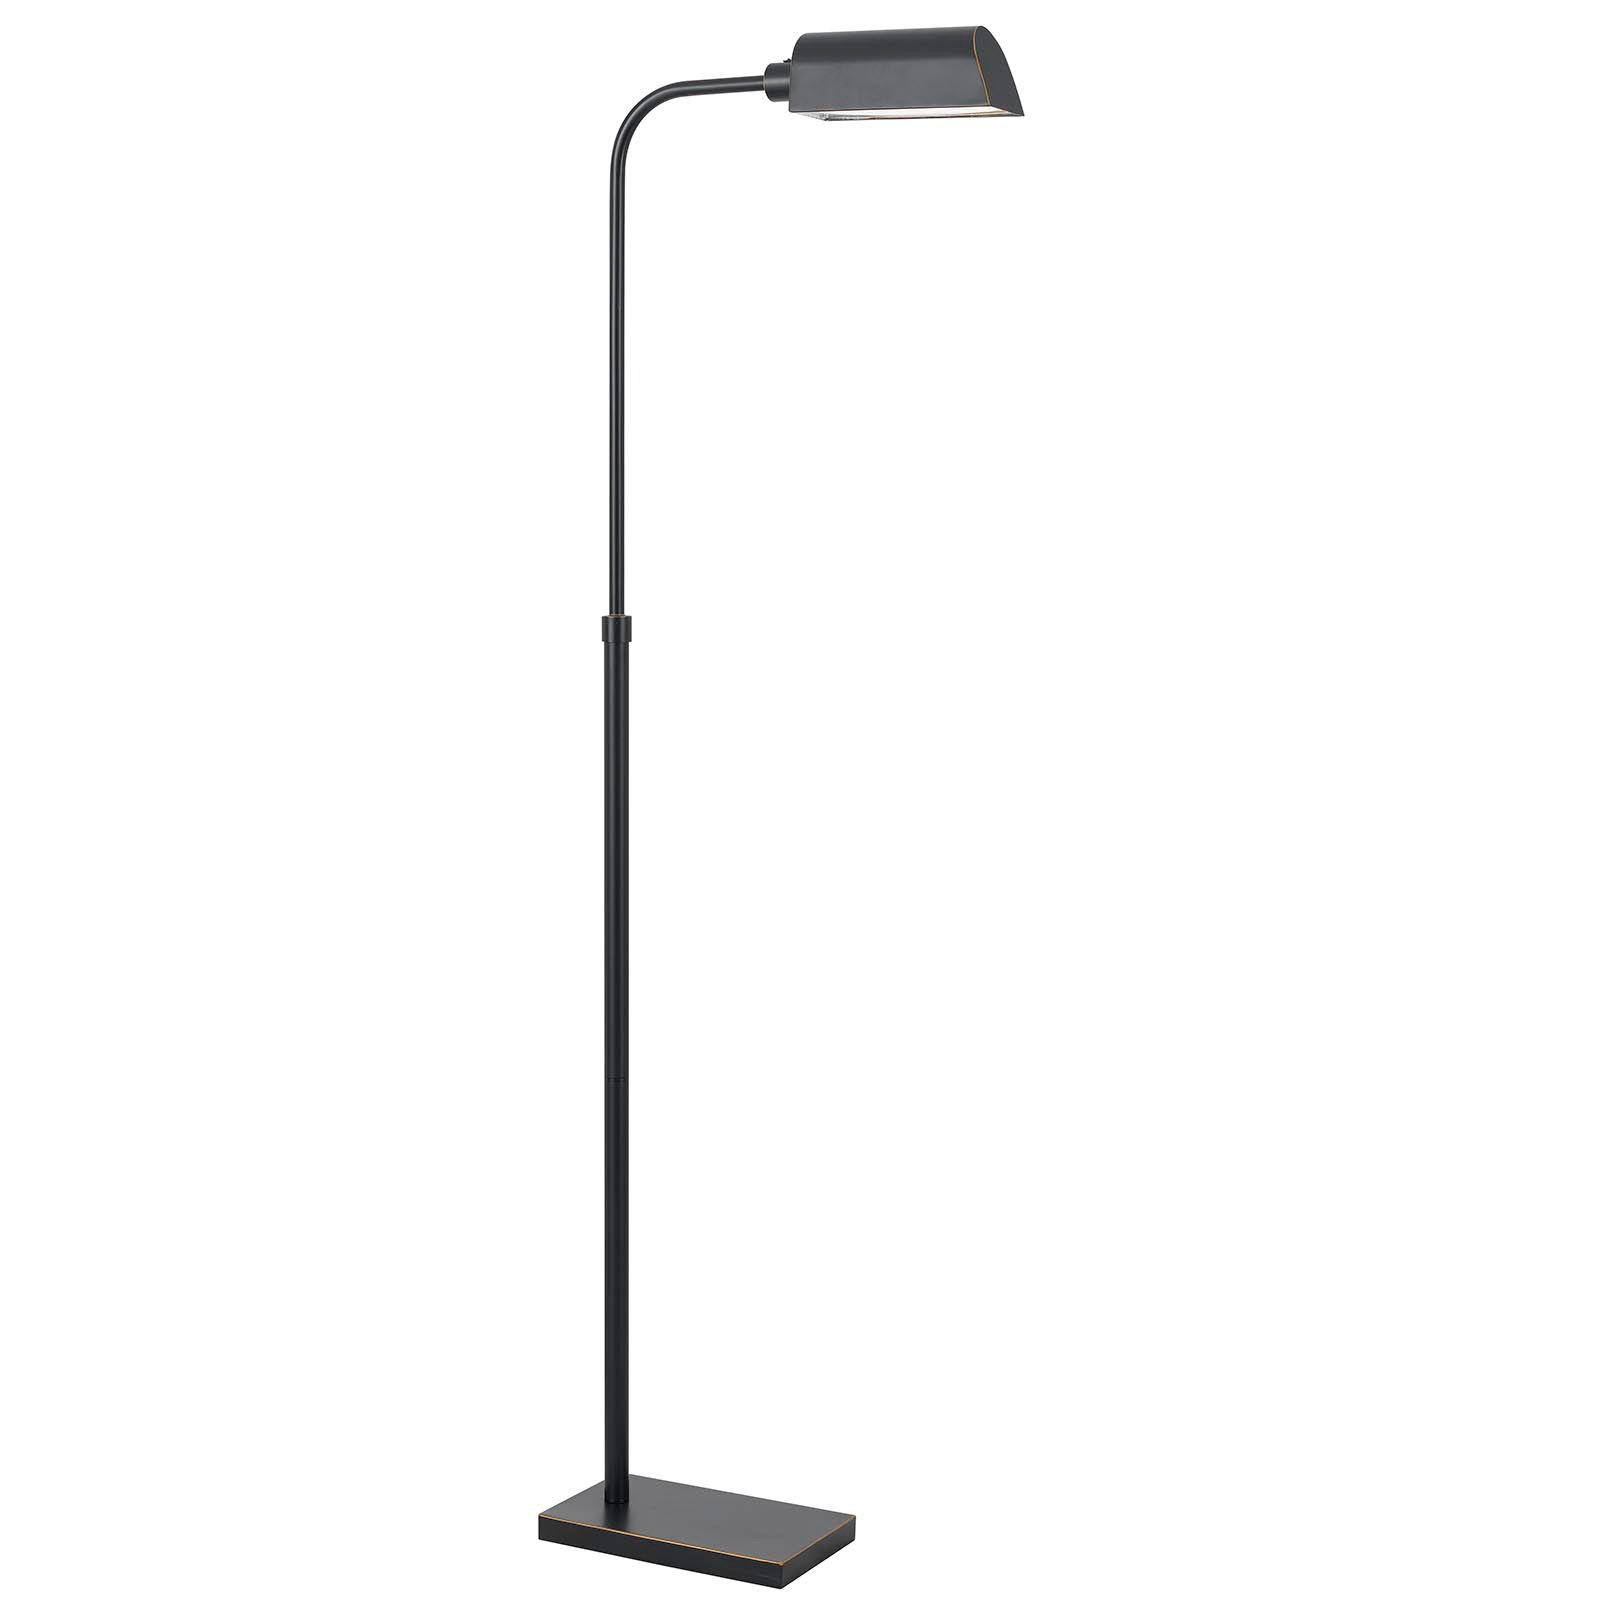 Cal Lighting :: Products :: Lamps :: Floor Lamps :: Bo 2618fl Pertaining To Dark Bronze Floor Lamps (View 15 of 20)